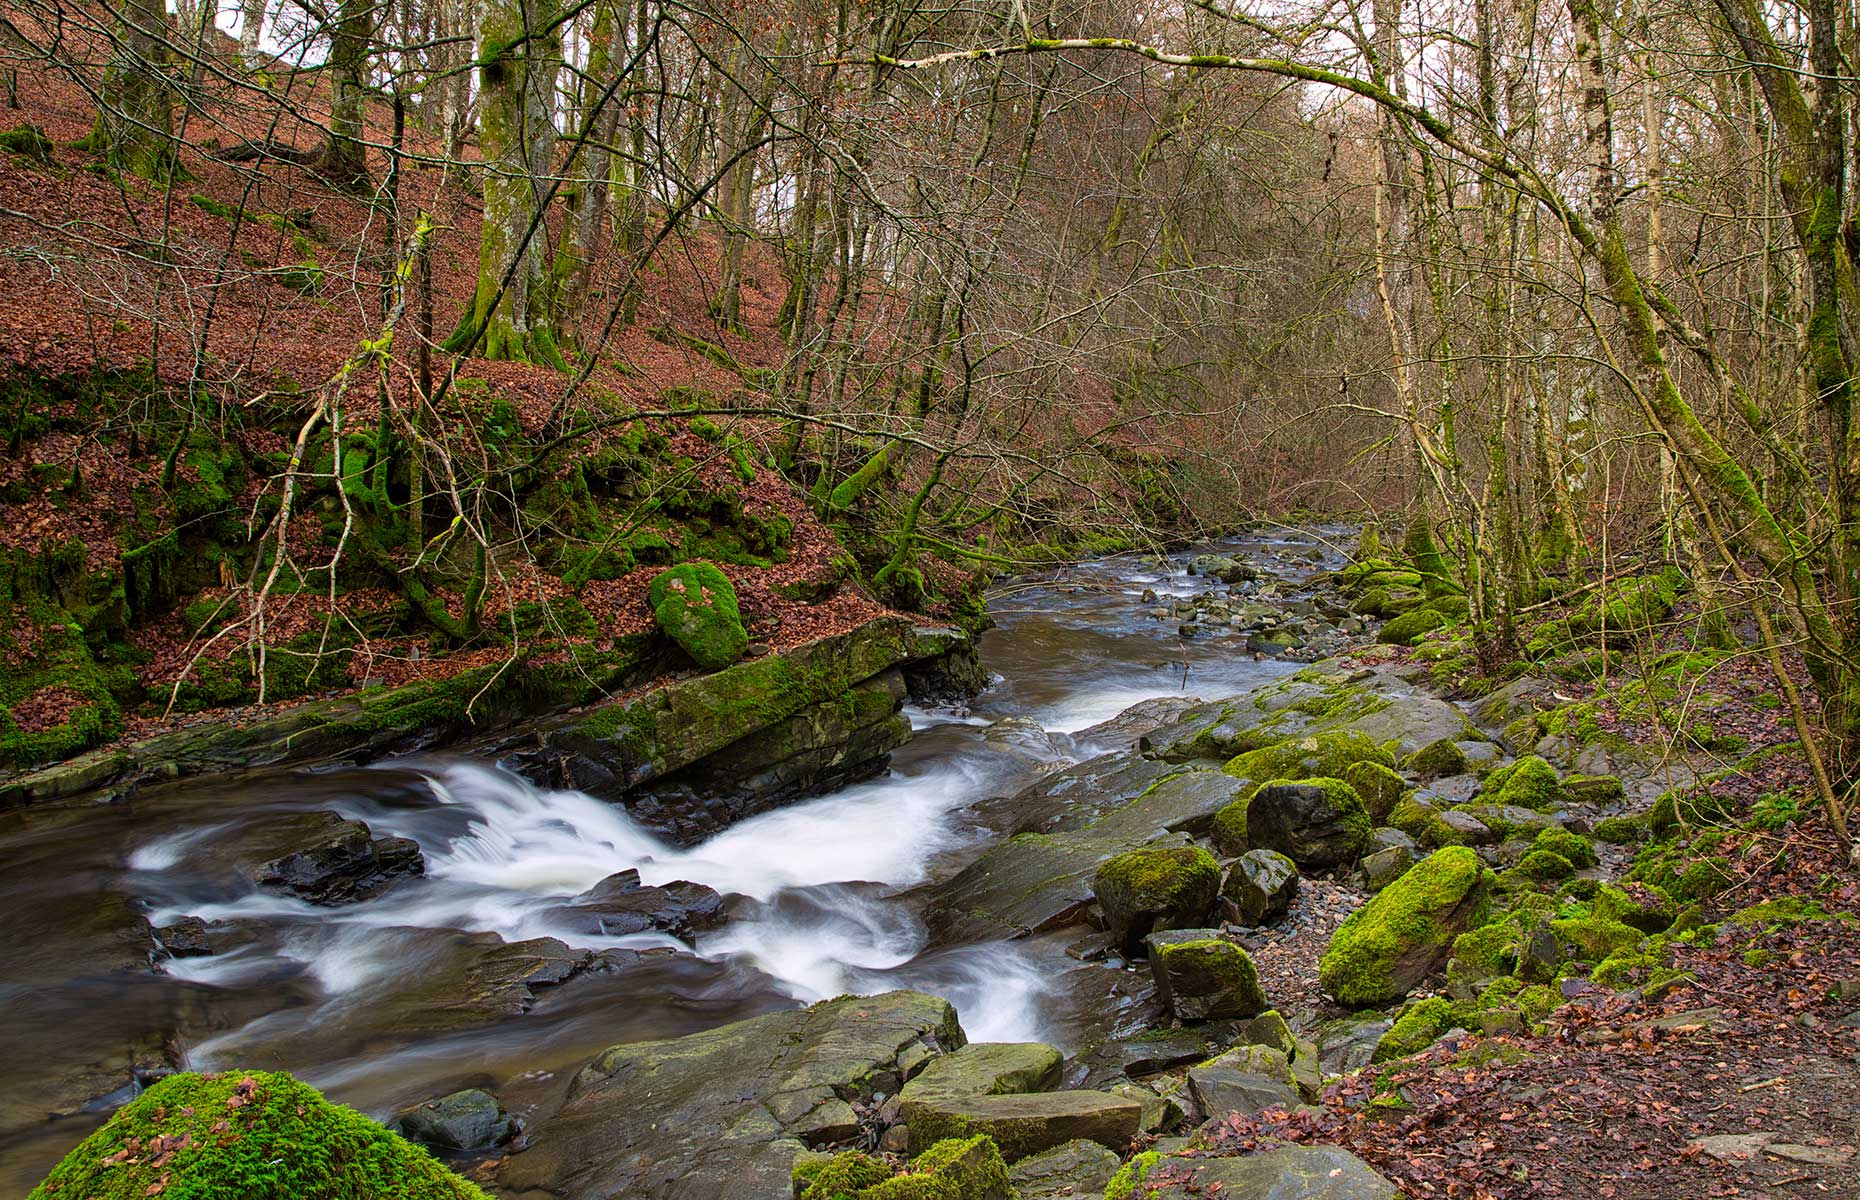 Waterfall in the Birks of Aberfeldy, Scotland (Image: Alex Nicol/Shutterstock)